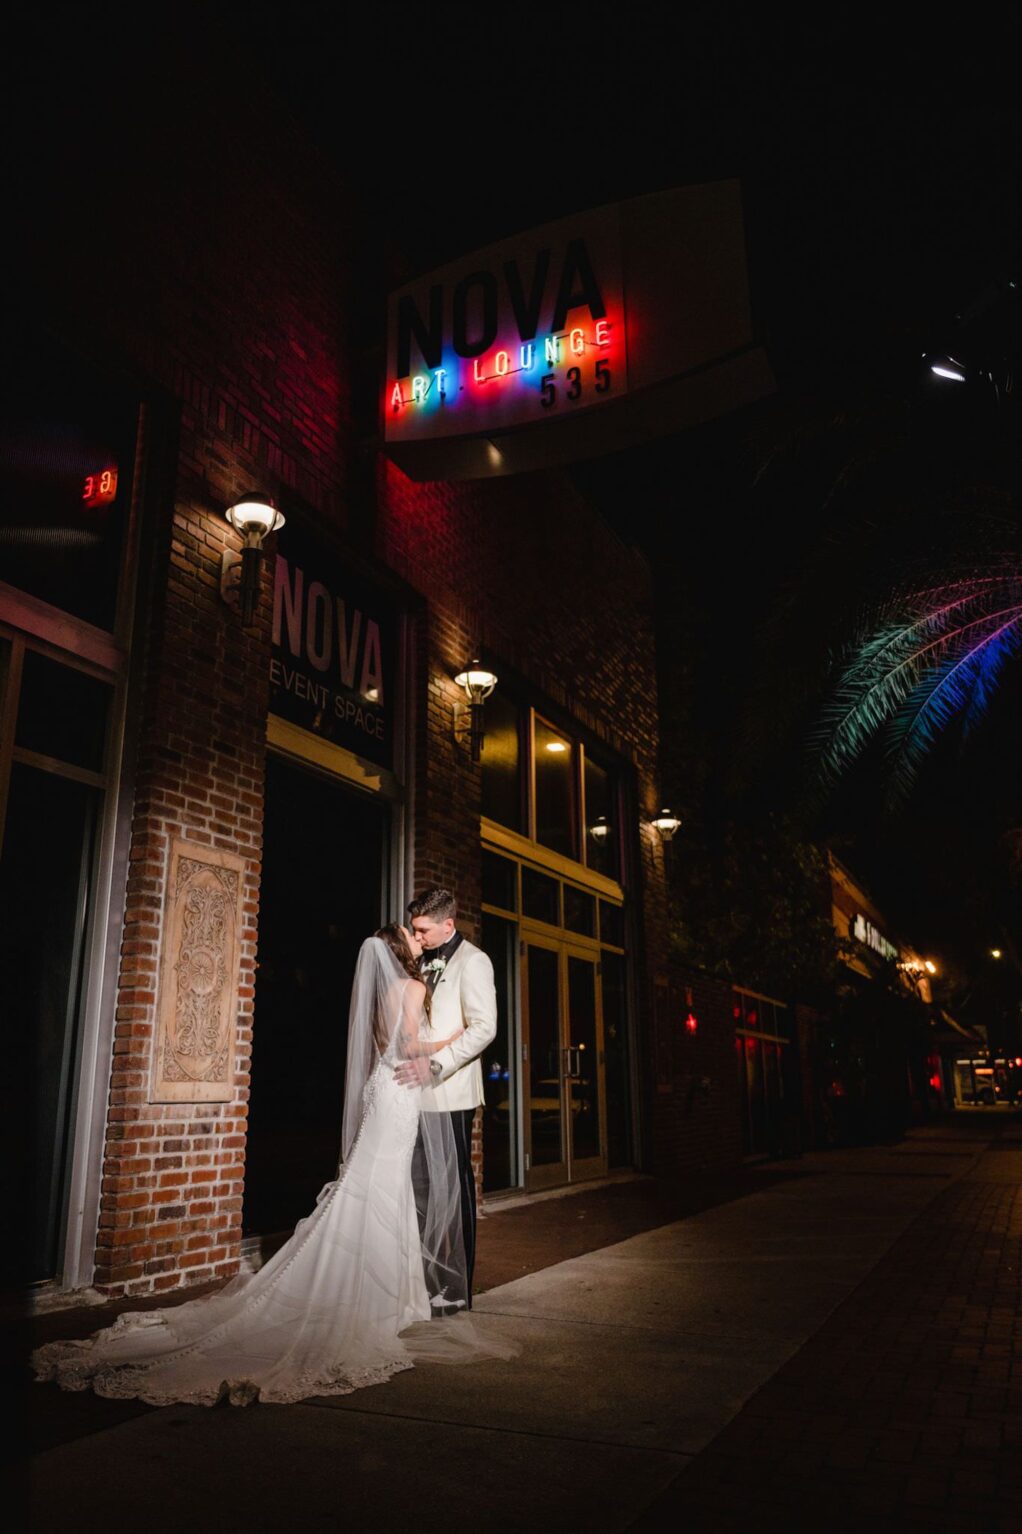 Bride and Groom Nighttime Wedding Portrait | St. Pete Wedding Photographer and Videographer Iyrus Weddings | Venue NOVA 535